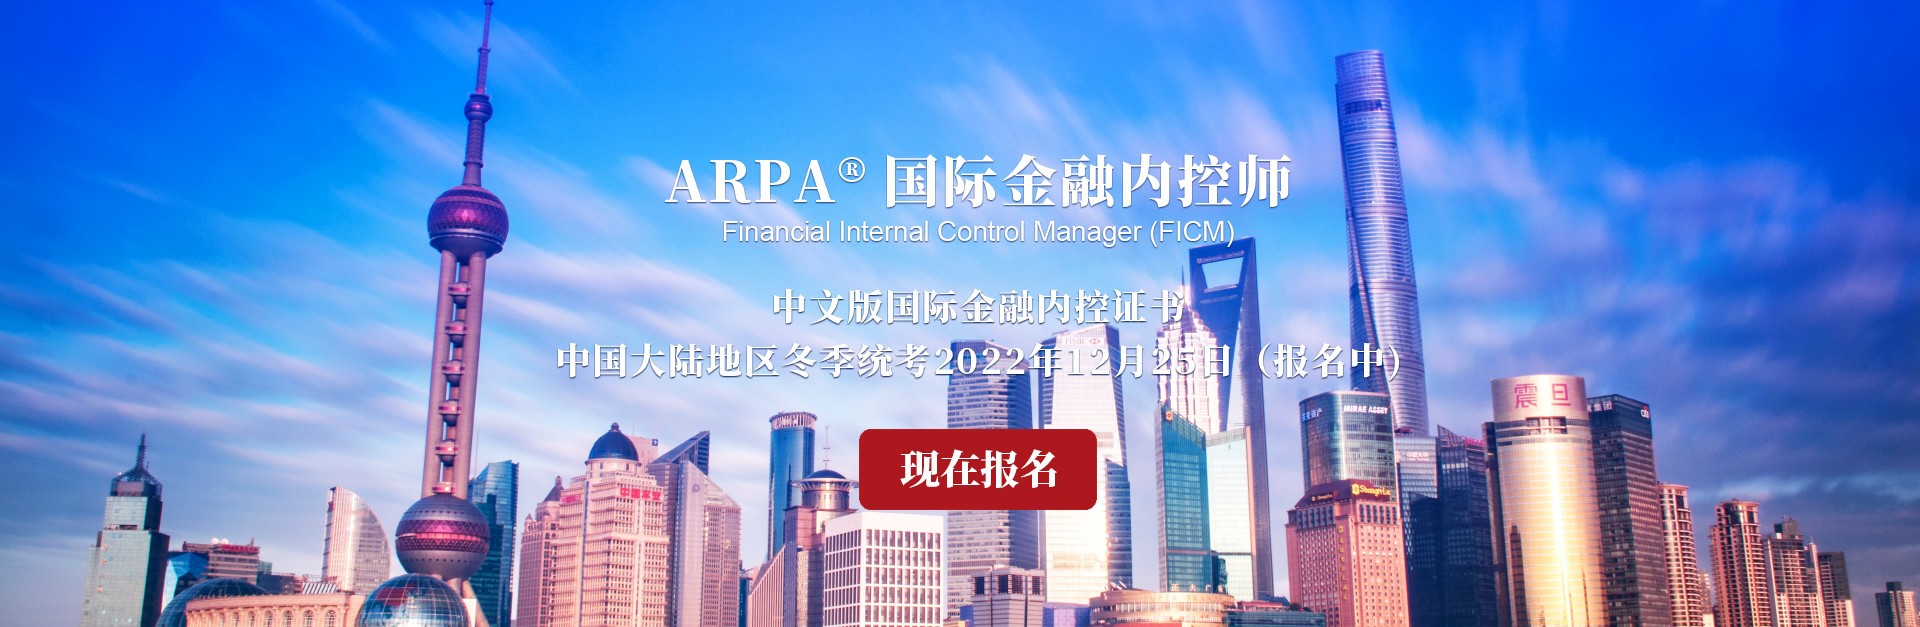 ARPA国际金融内控师